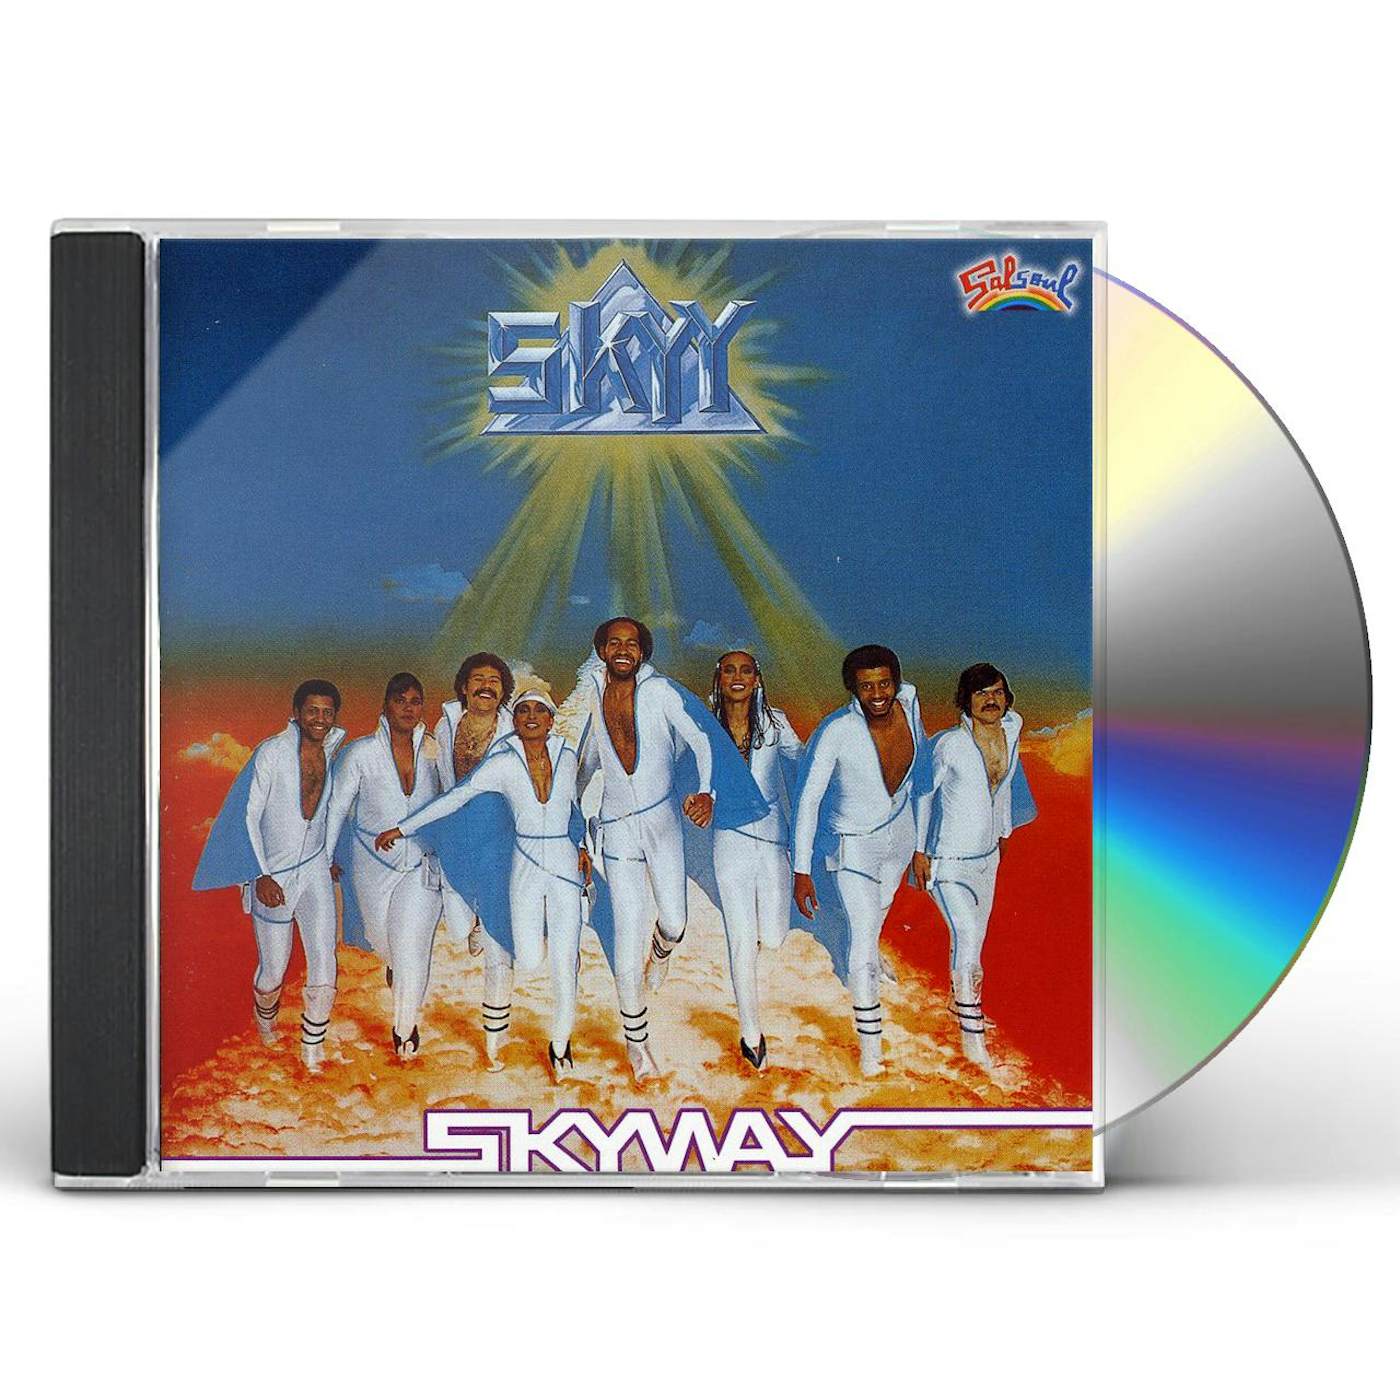 SKYYWAY CD